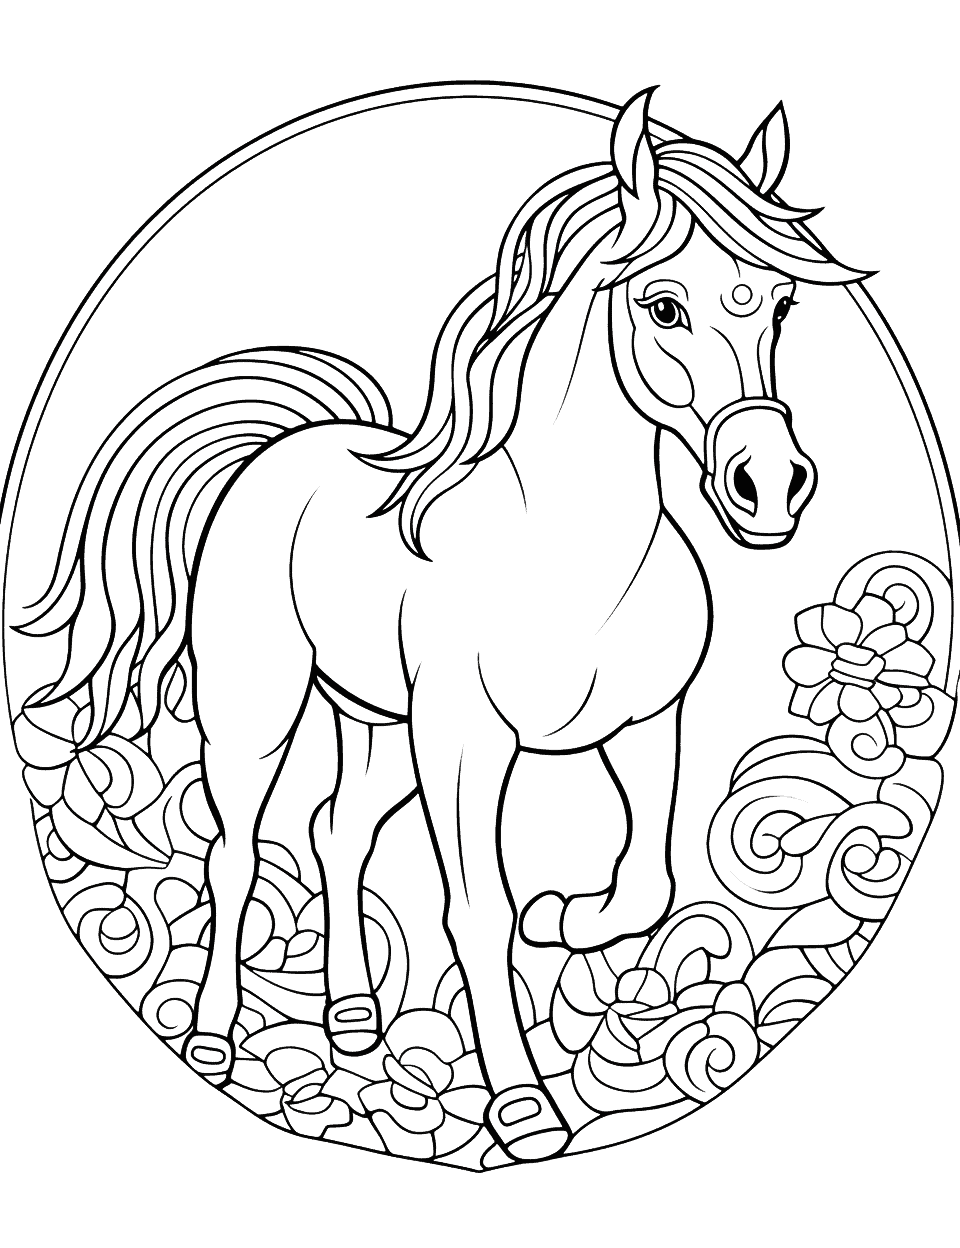 Horse Mandala Design Coloring Page - A complex horse-themed mandala design for older kids.